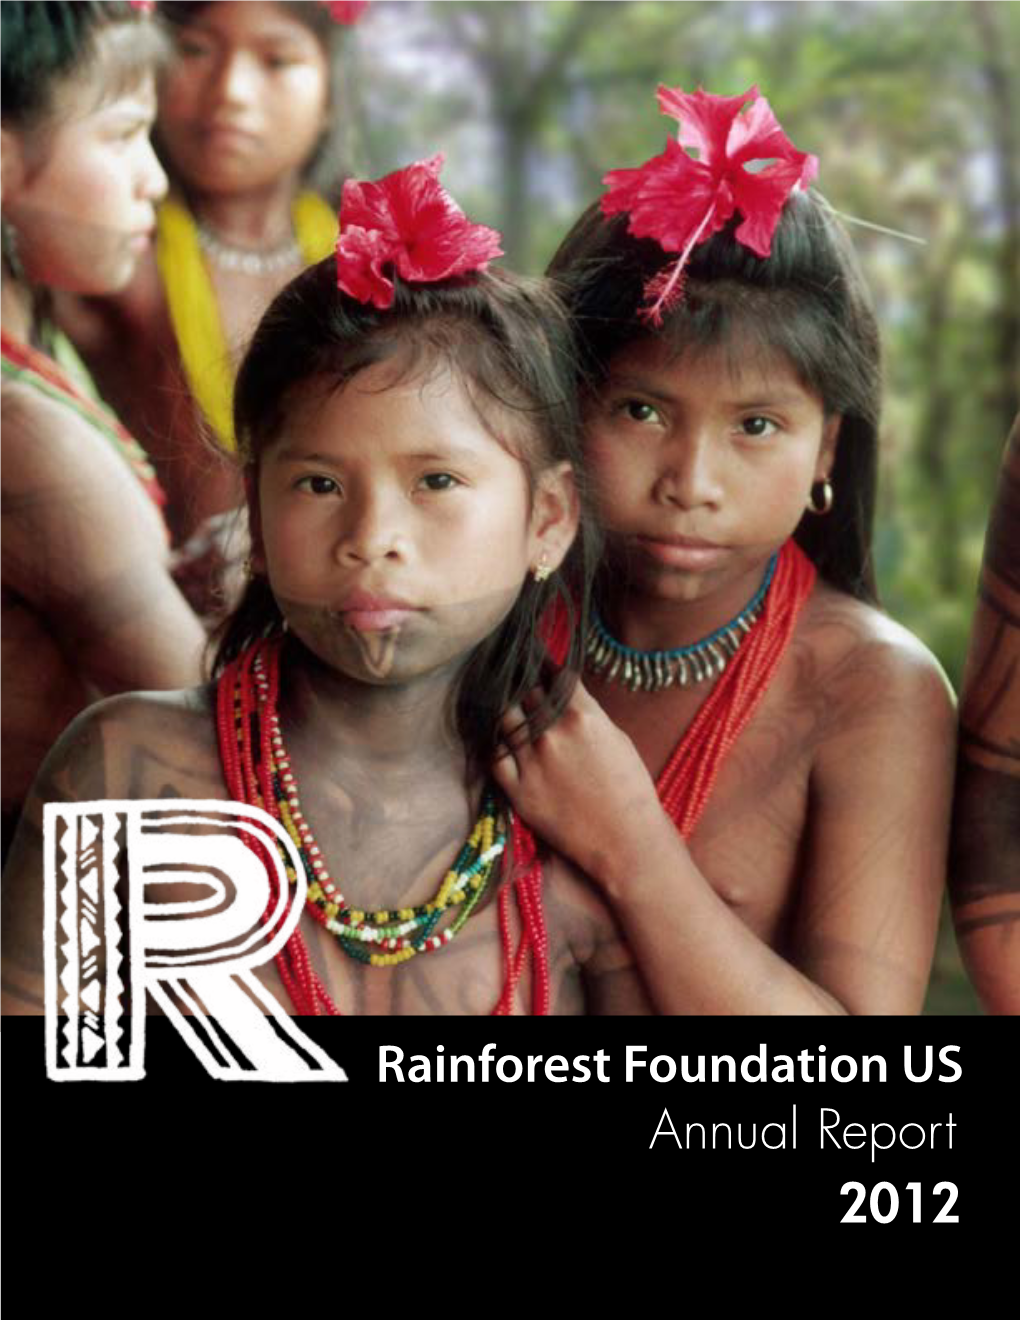 Rainforest Foundation US Annual Report 2012